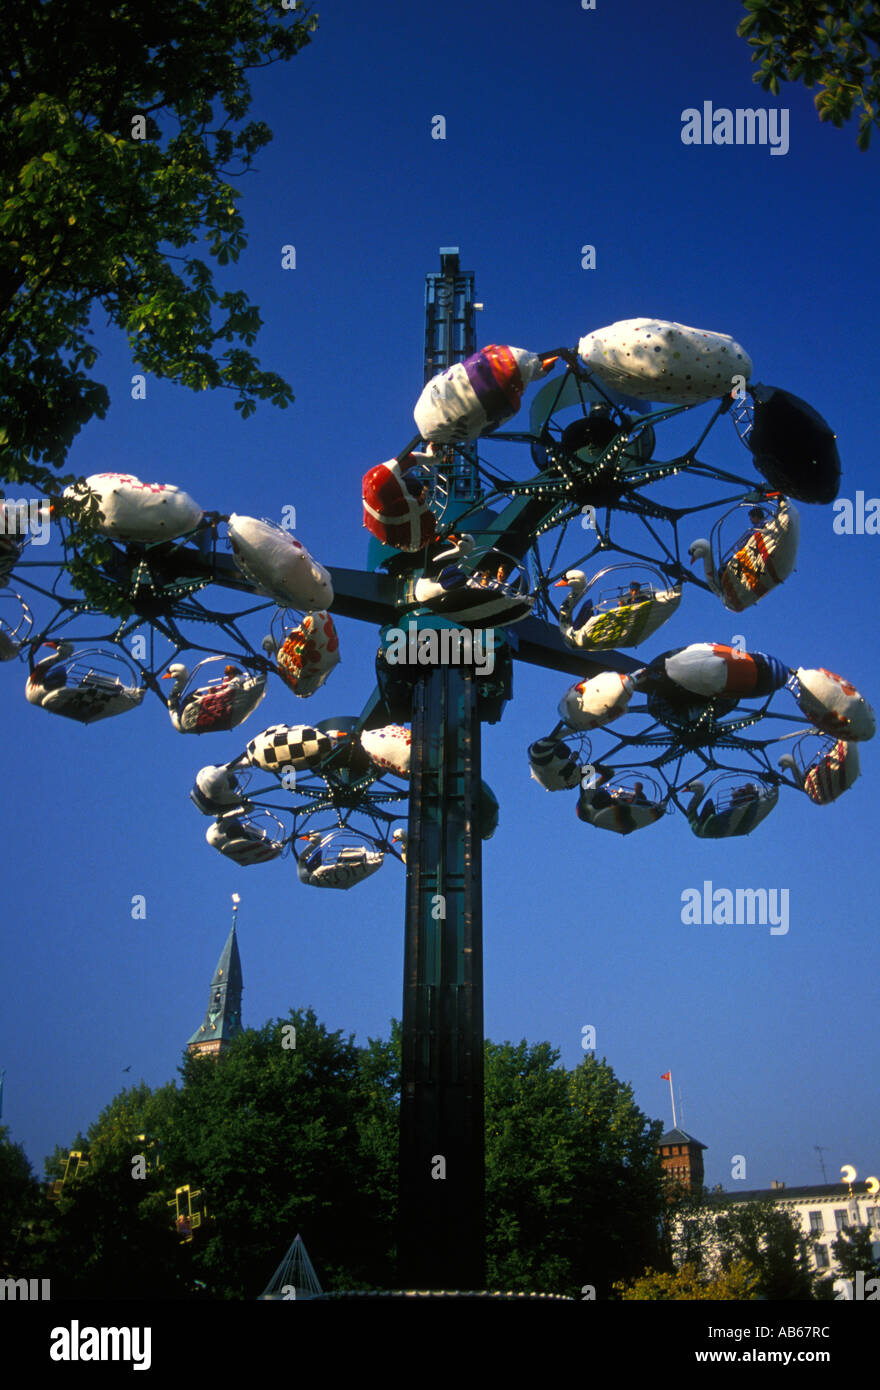 revolving ride, amusement ride, mechanical ride, amusement park, Tivoli Gardens, Copenhagen, Denmark, Europe Stock Photo